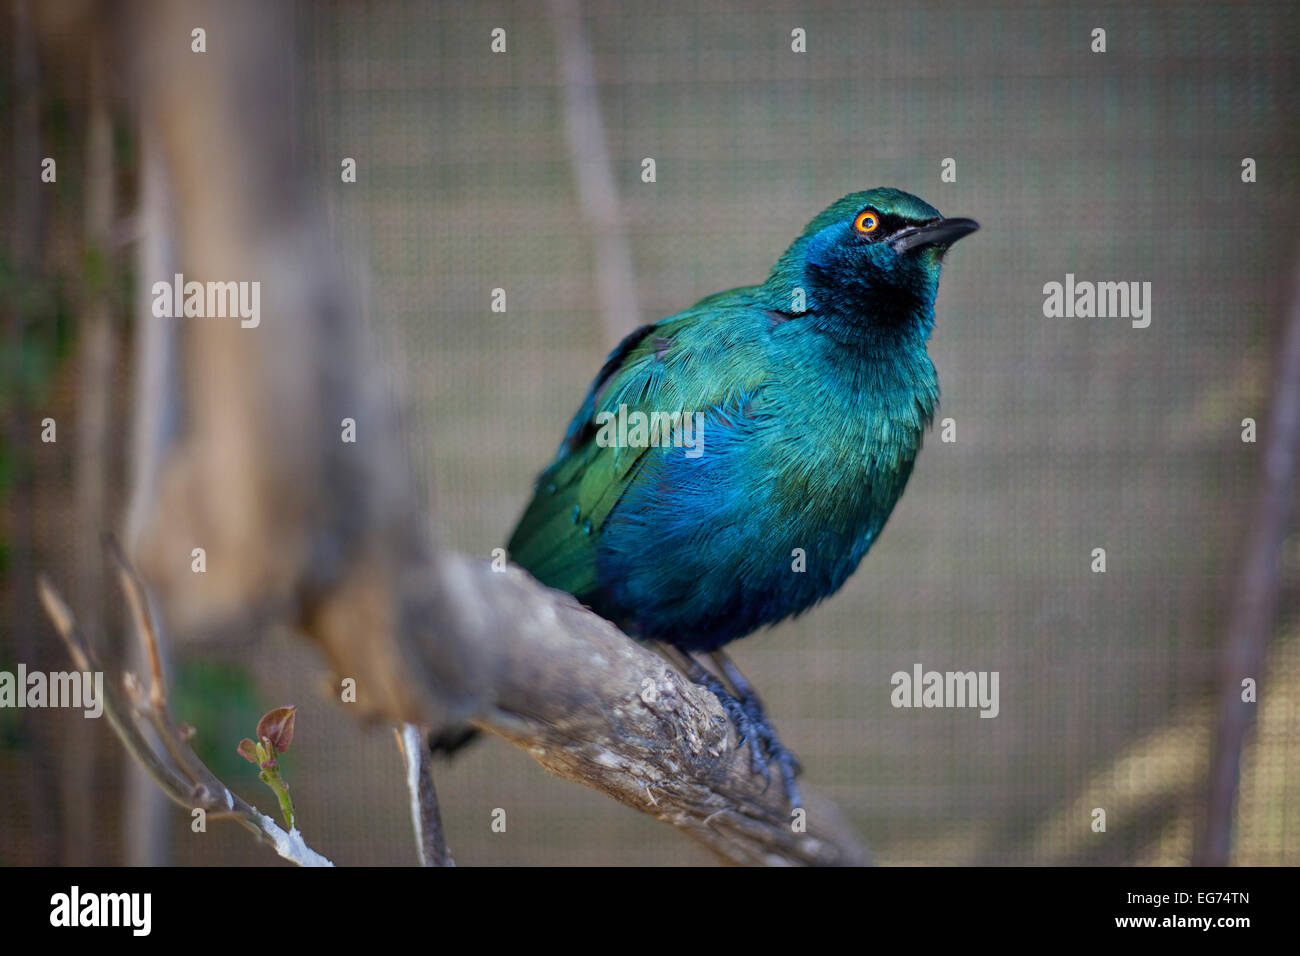 Cape starling bird Stock Photo